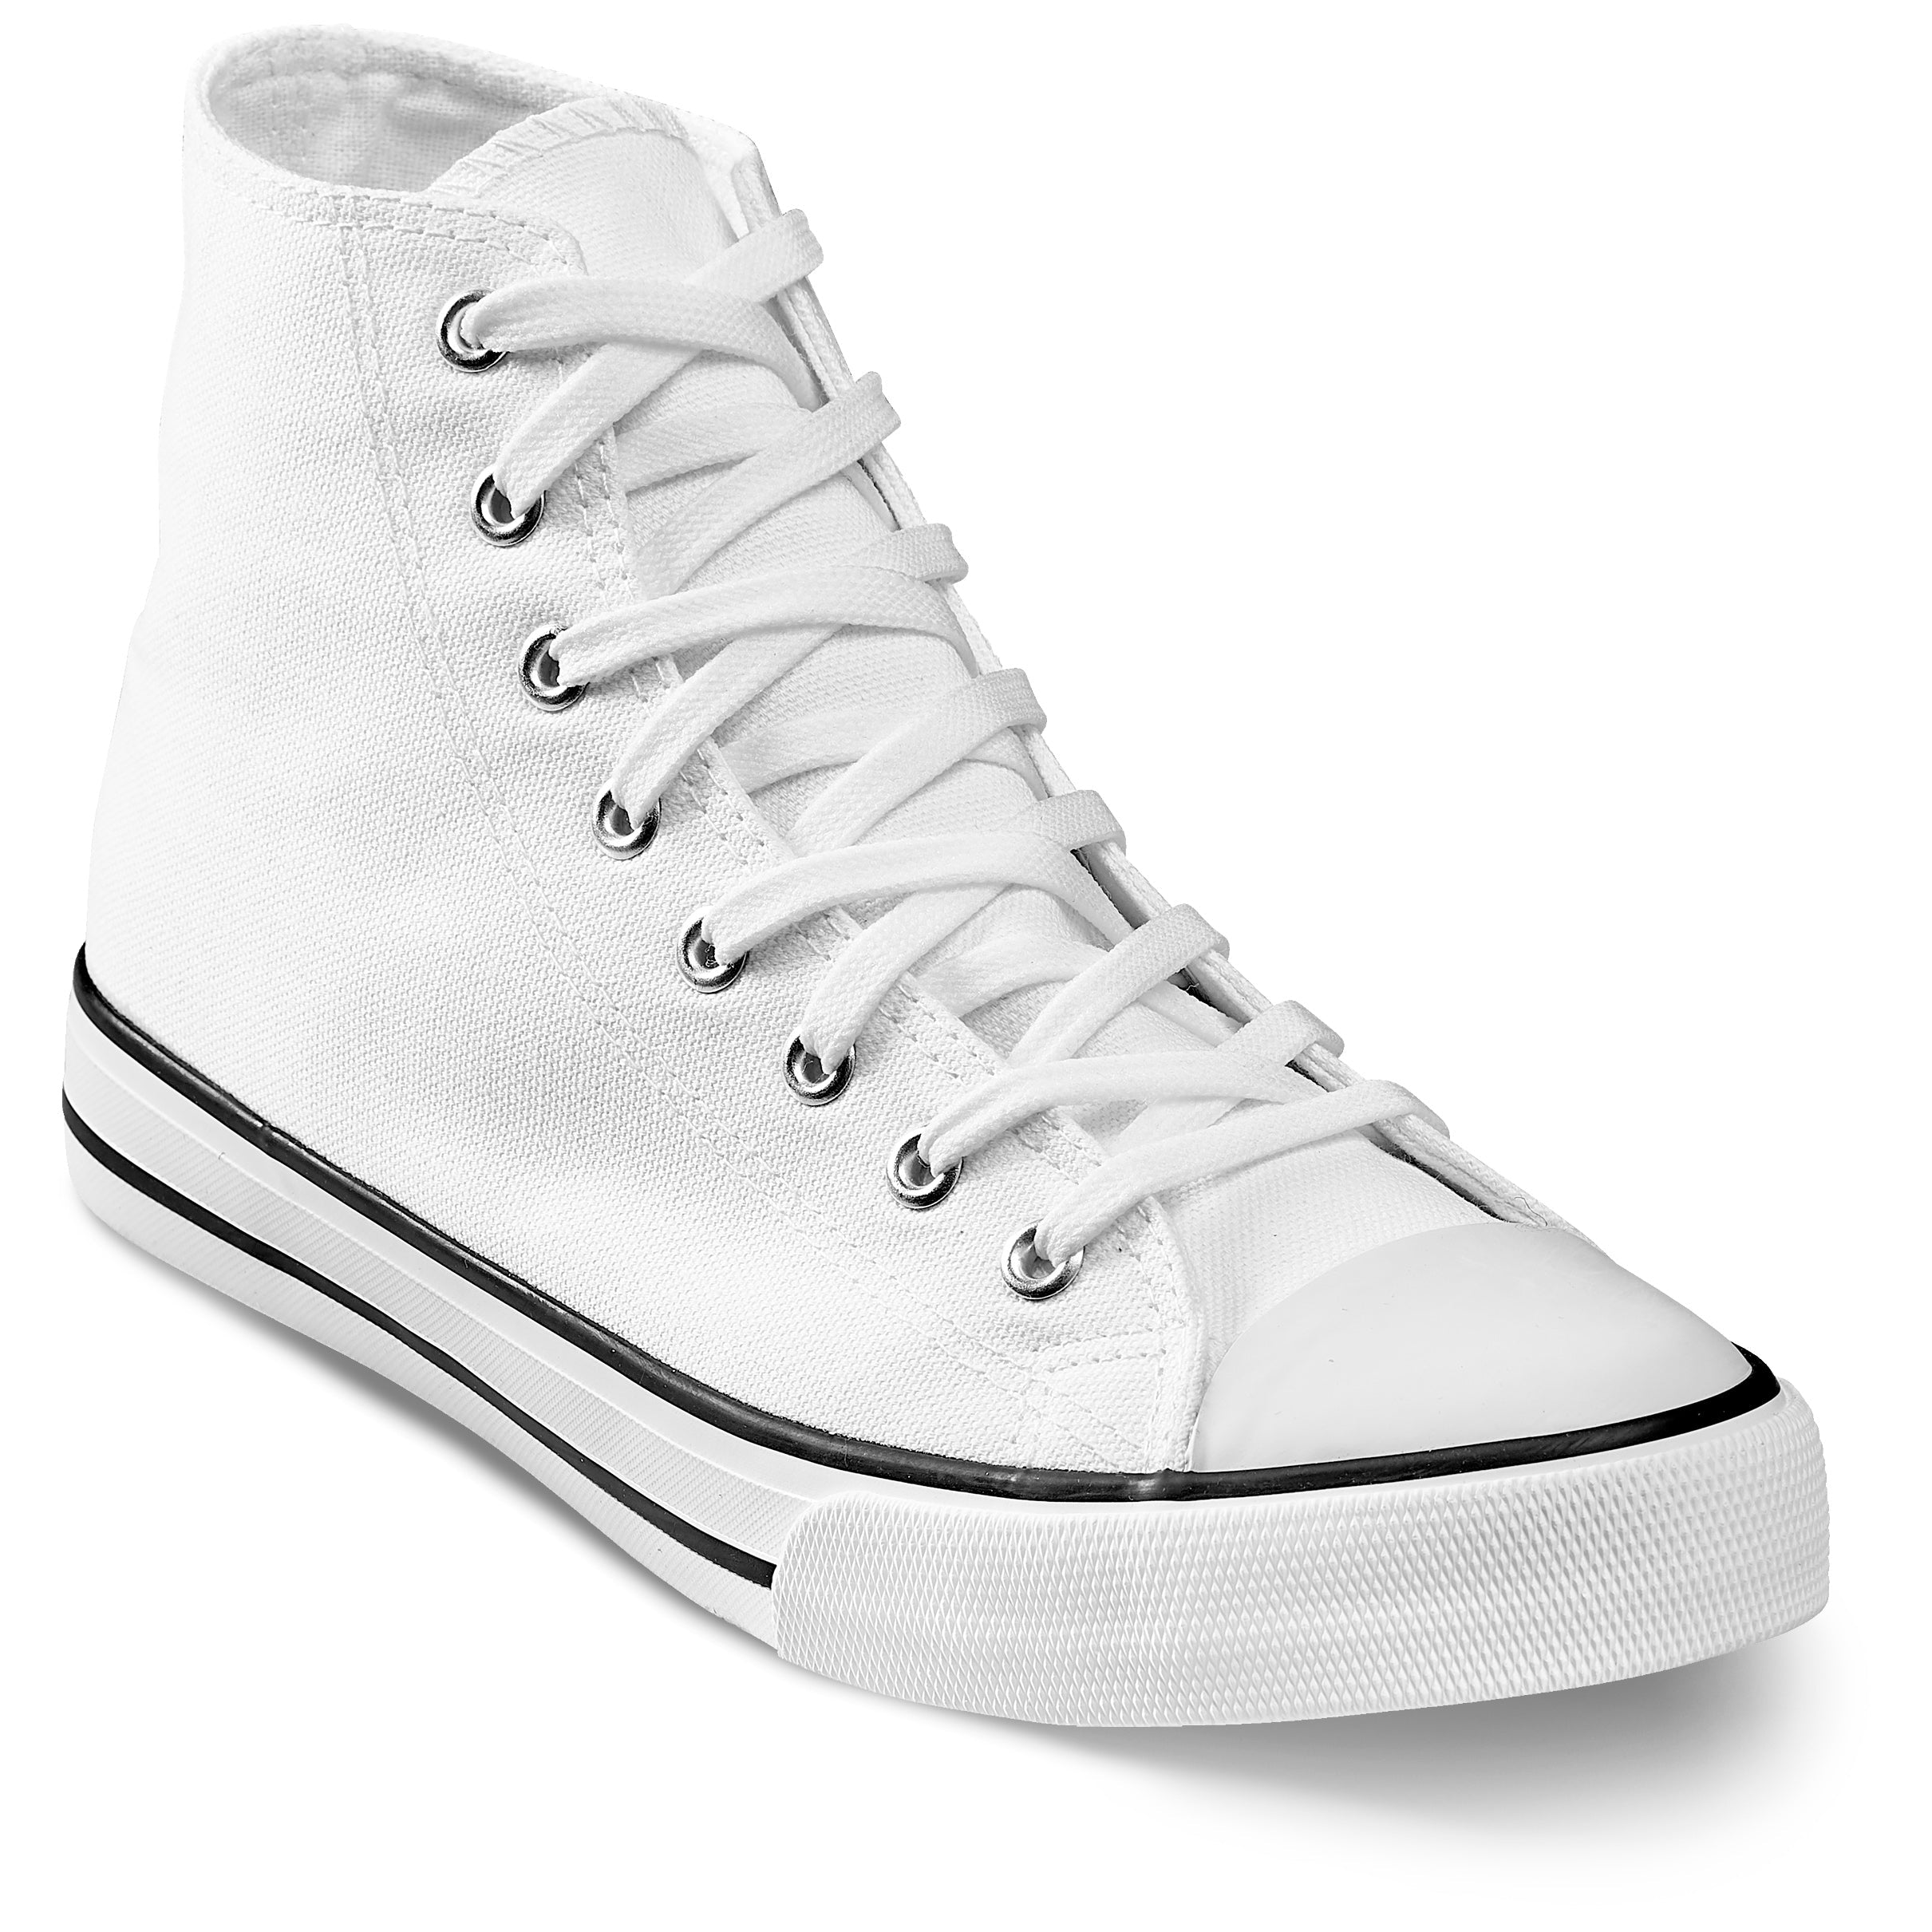 Unisex Retro High Top Canvas Sneaker-Shoes-2-White-W